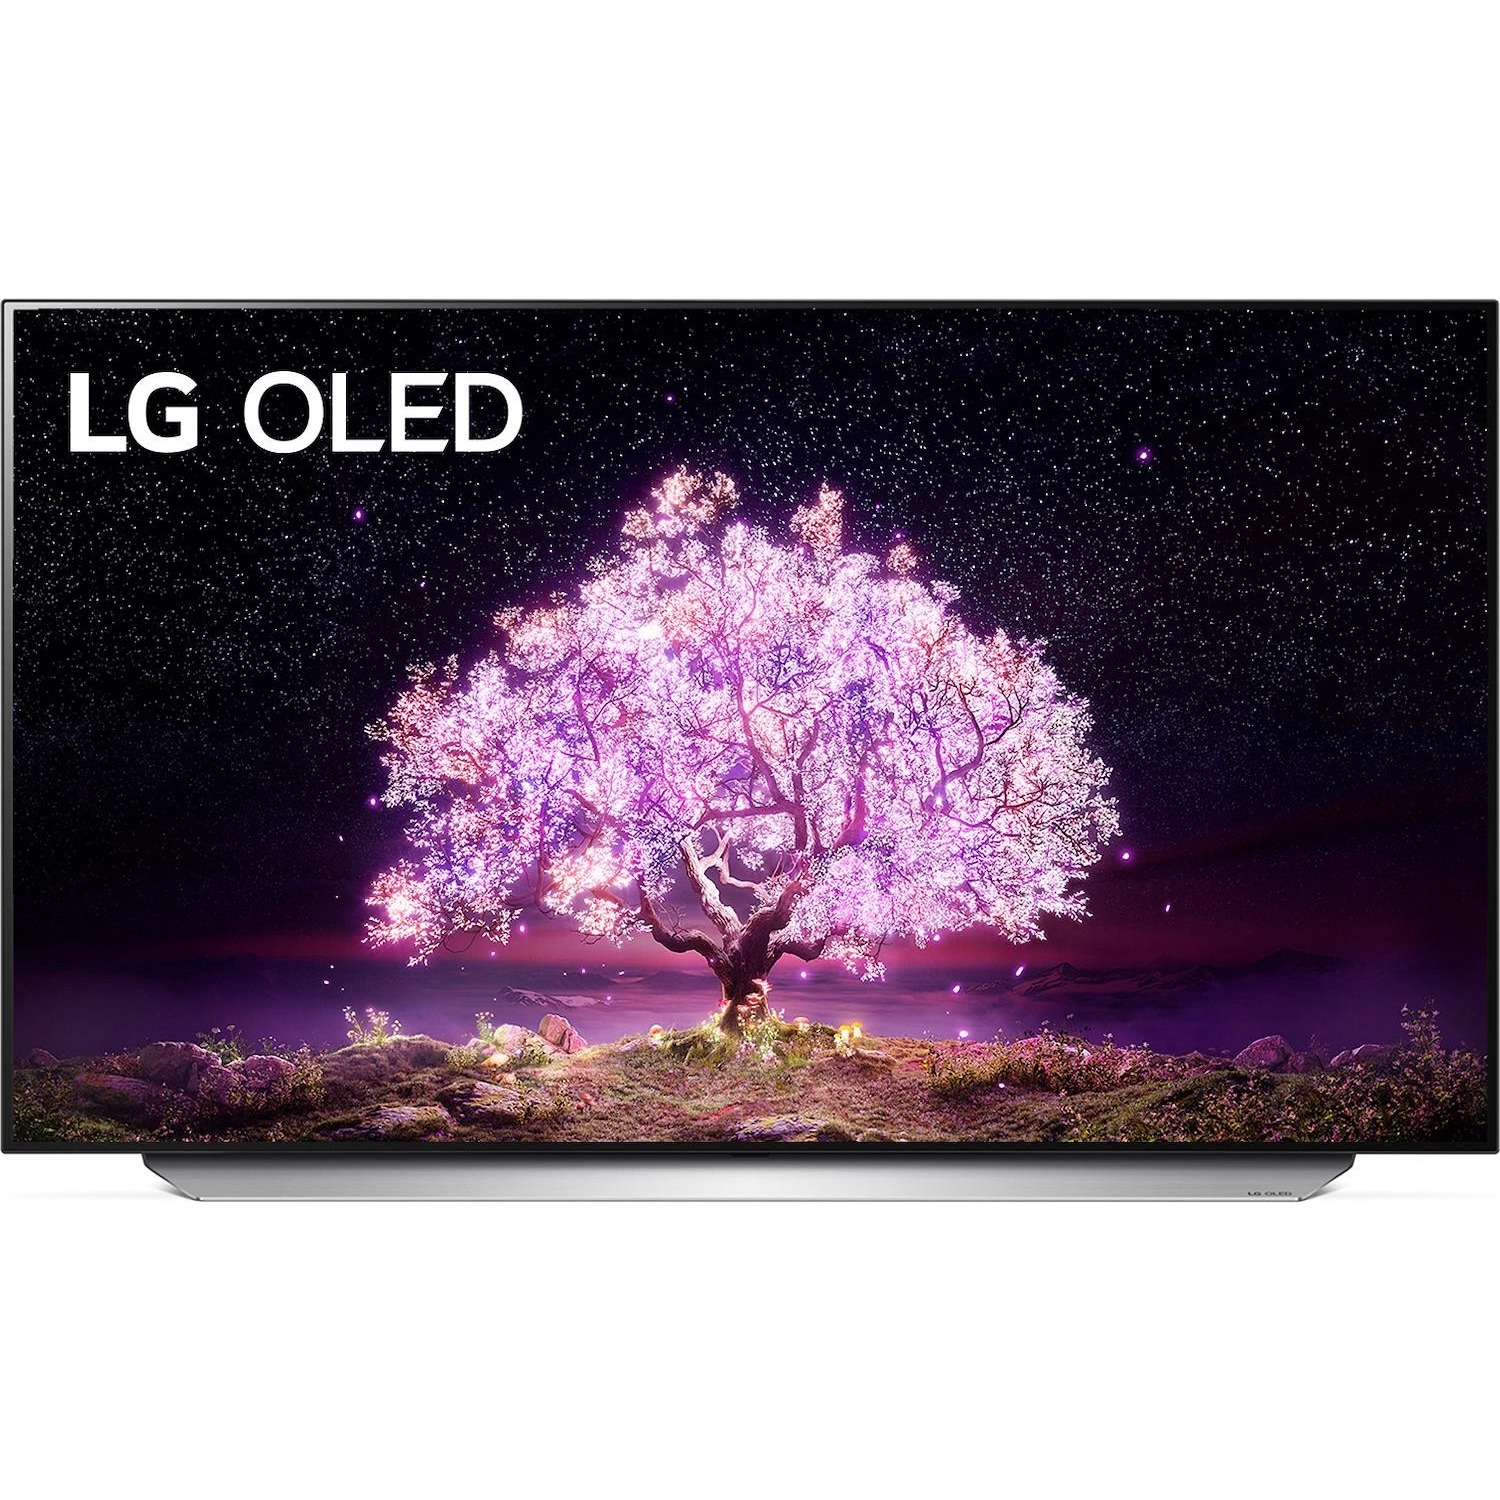 Immagine per TV OLED UHD 4K Smart LG OLED55C16 da DIMOStore